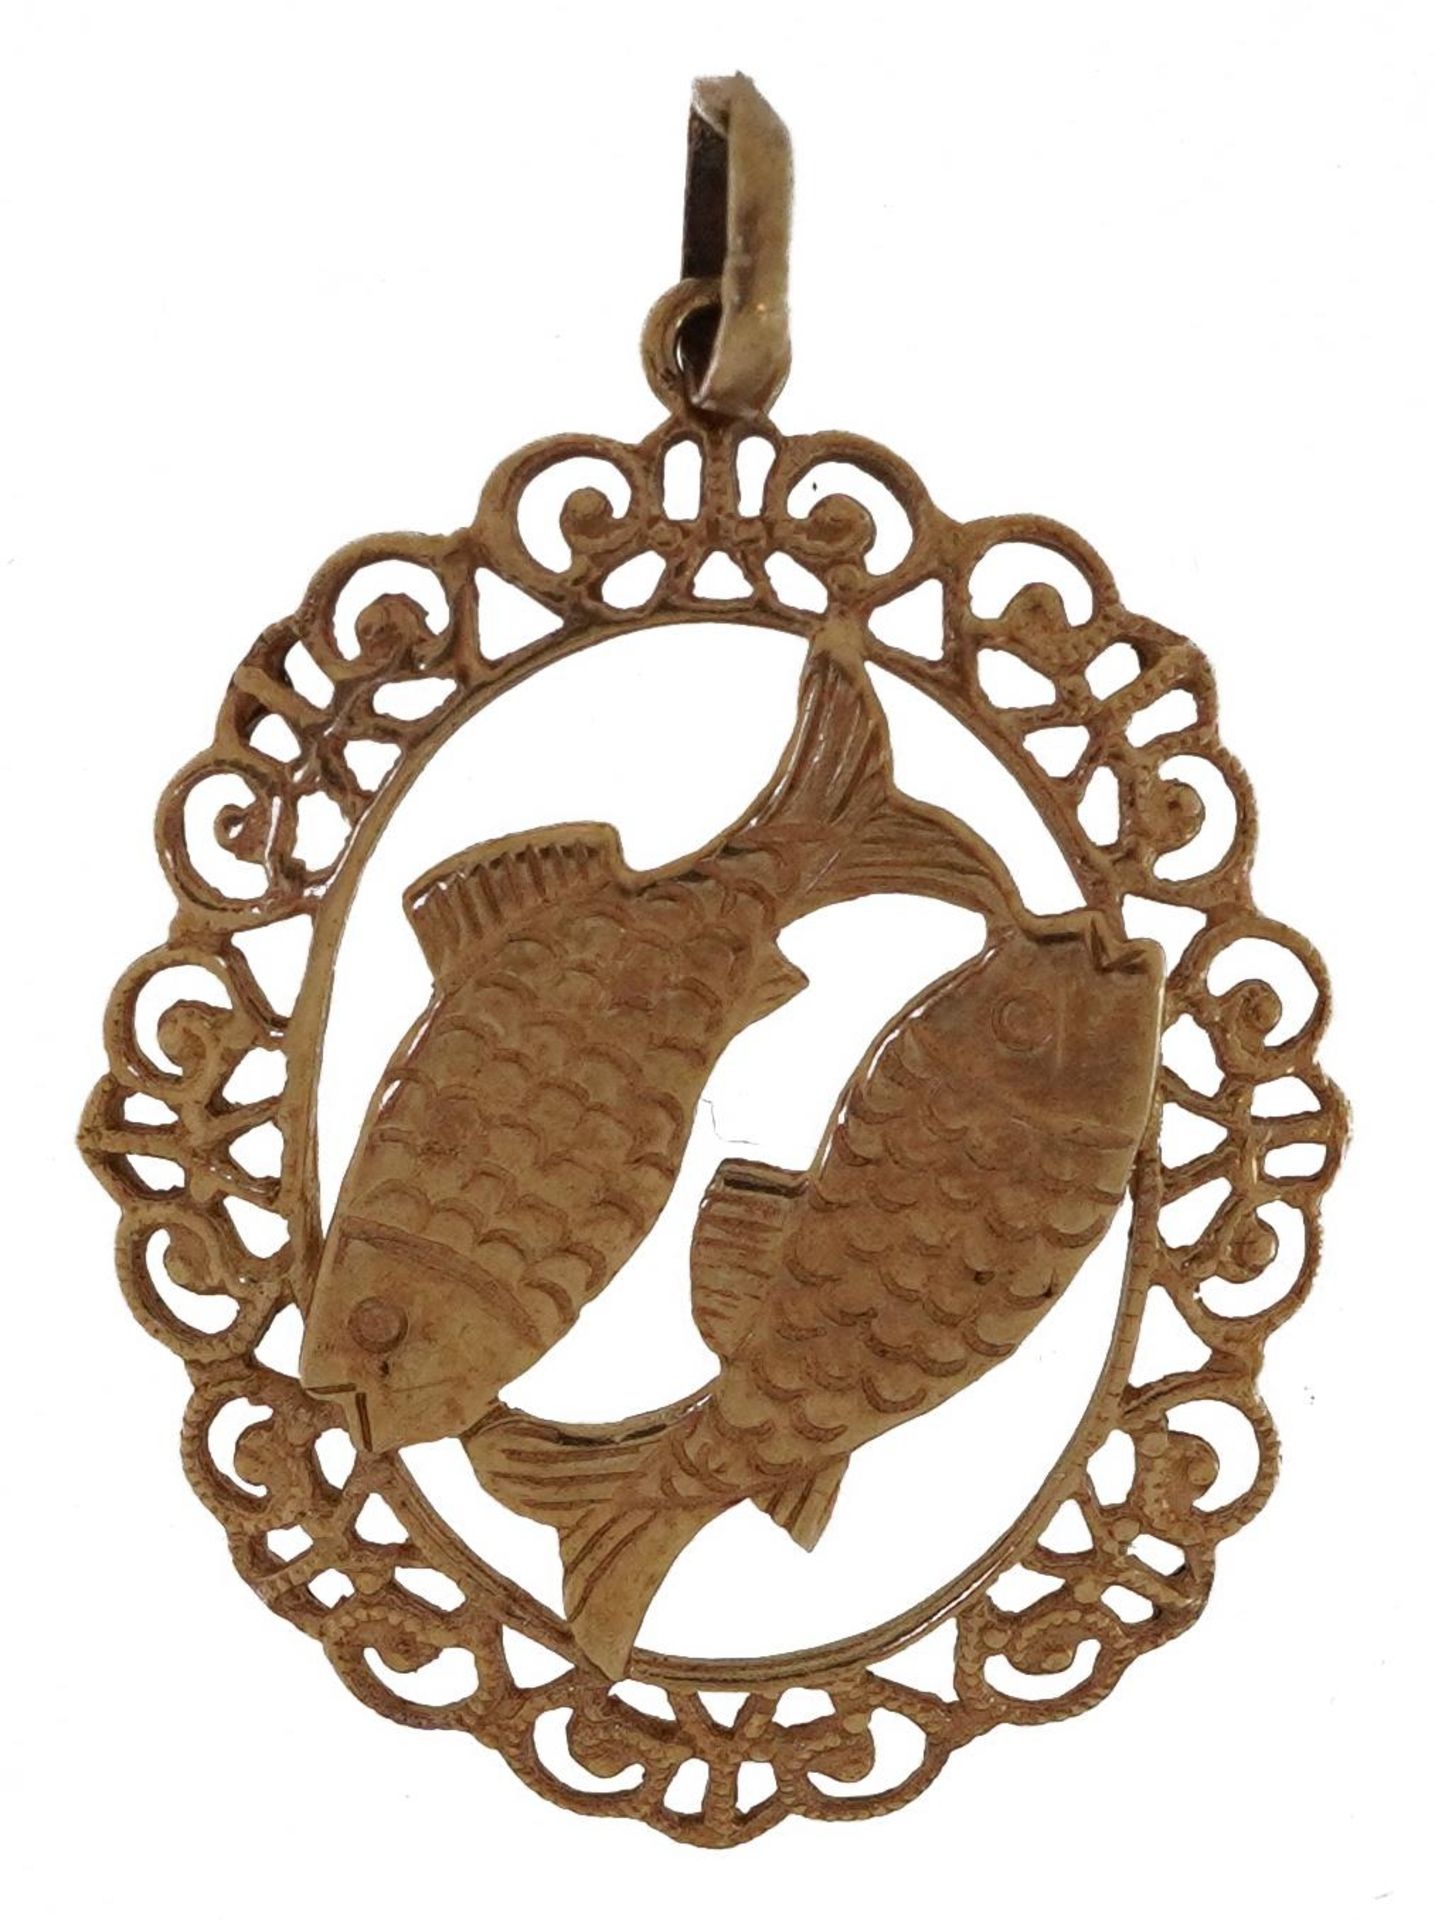 9ct gold openwork fish pendant, 3.0cm high, 1.1g